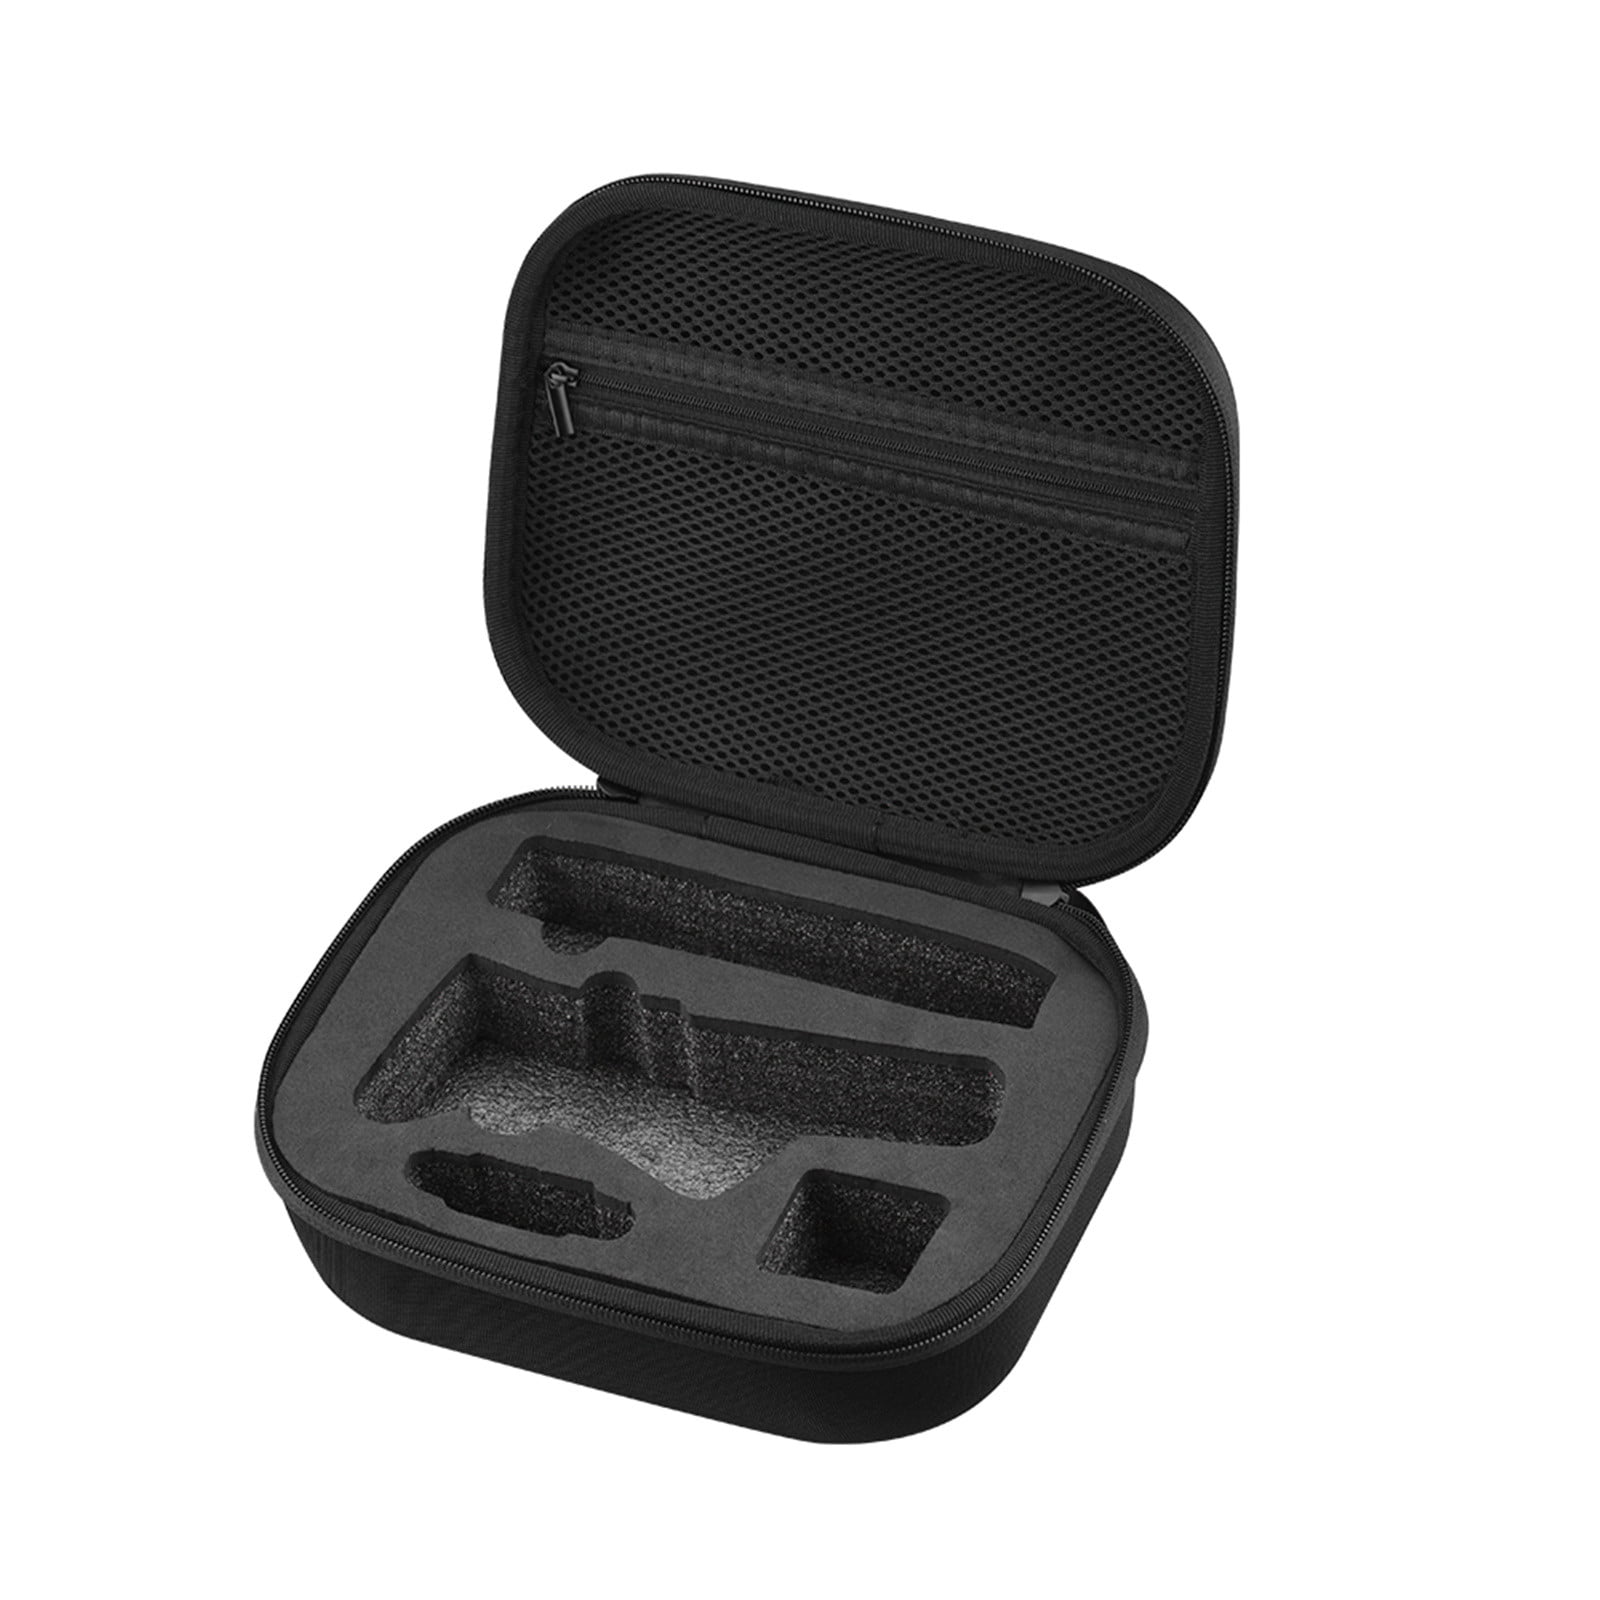 Fxbar Travel Case For Dji Om5- Portable Storage Bag Hardshell Case Fits Dji  Osmo Mobile 5 Gimbal Stabilizer And Accessories Black